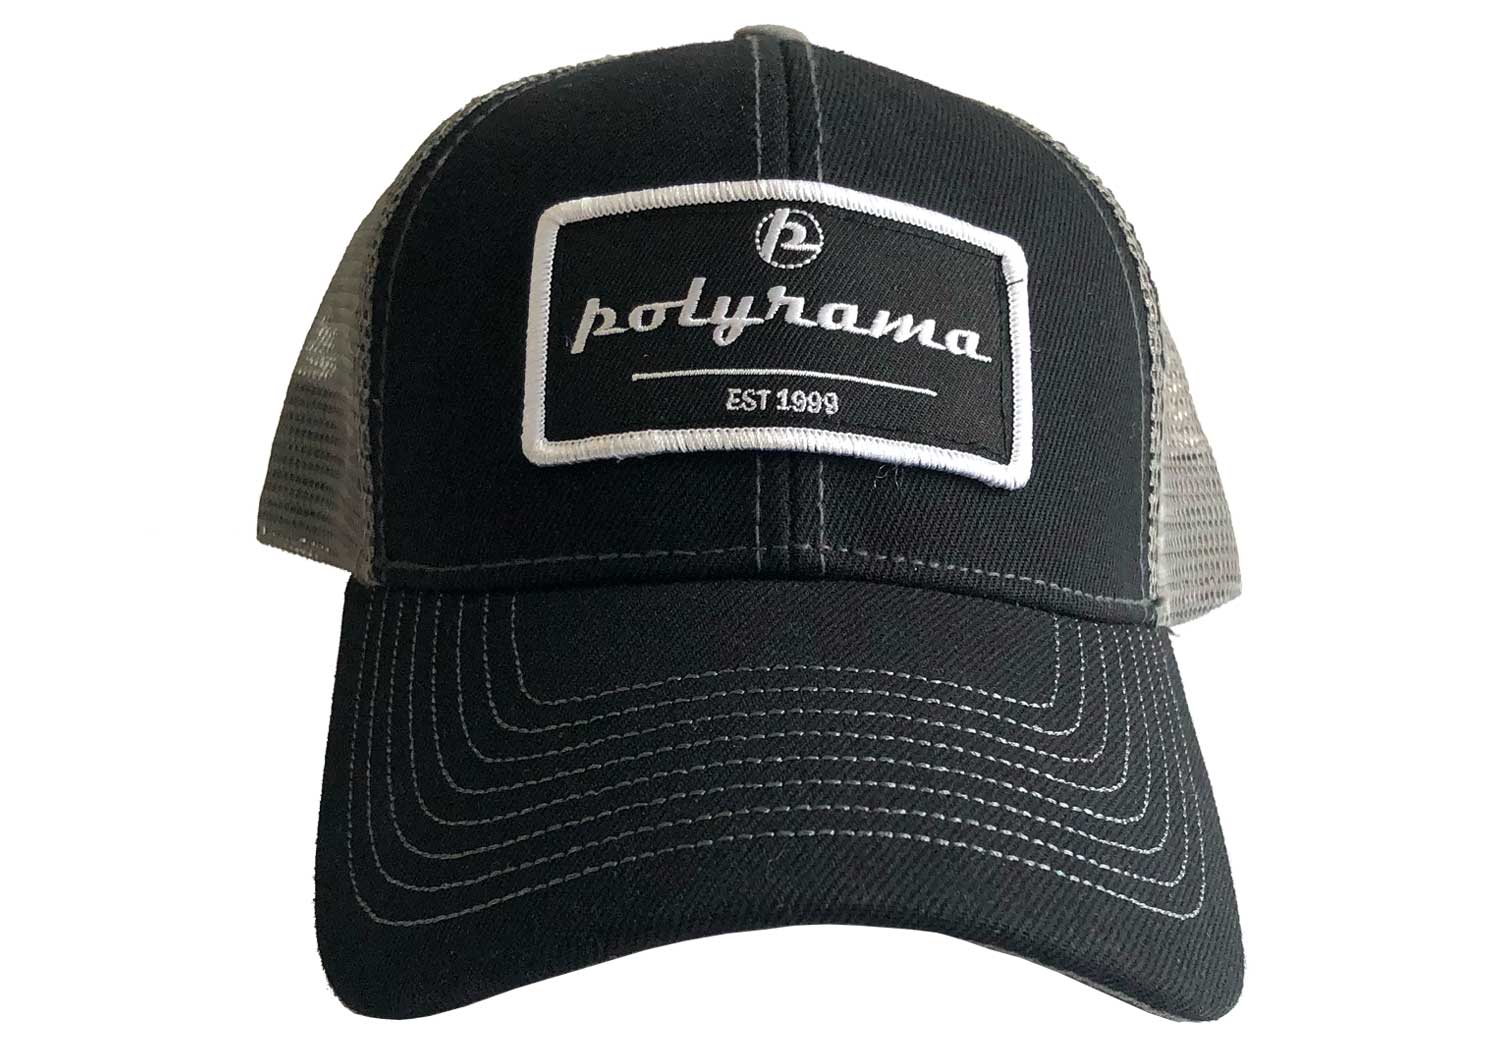 Polyrama Trucker Hat #1634 front view